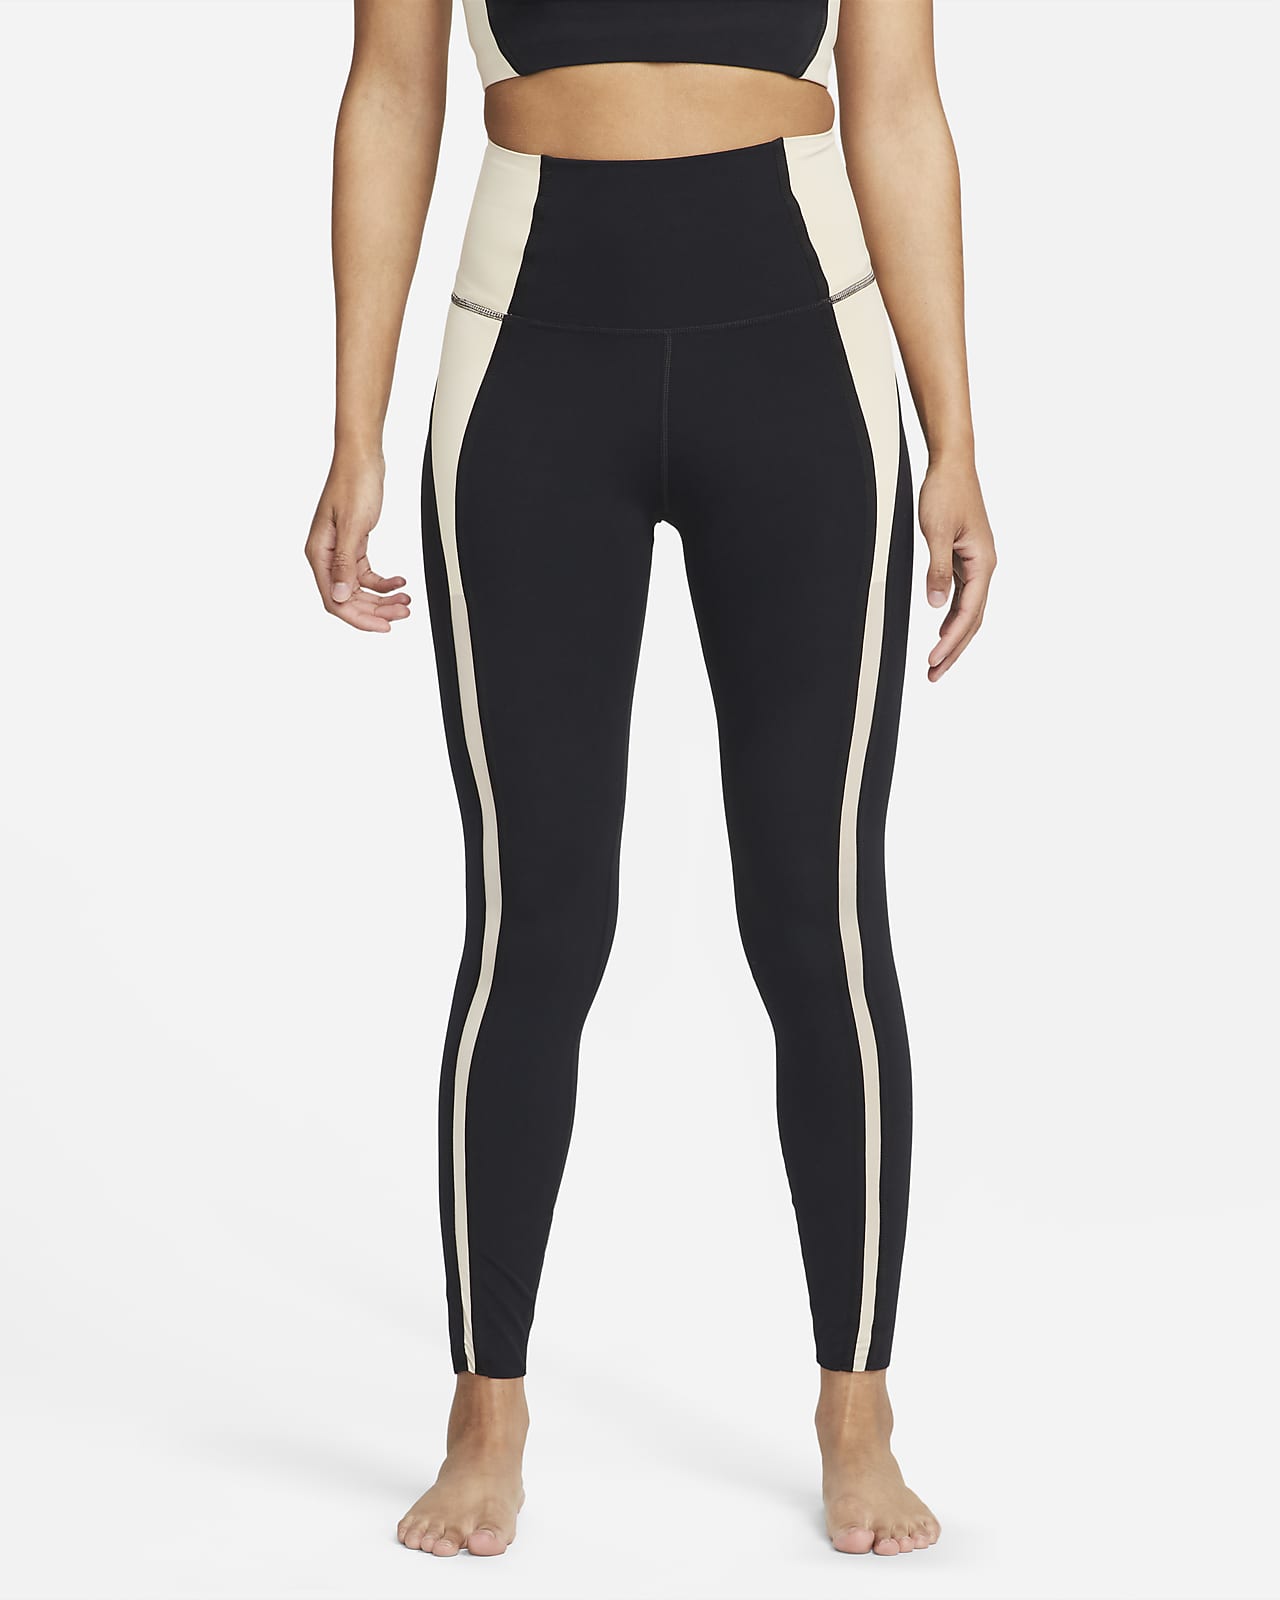 Mallas Nike Sportswear Negro Blanco Mujer - Máxima Flexibilidad